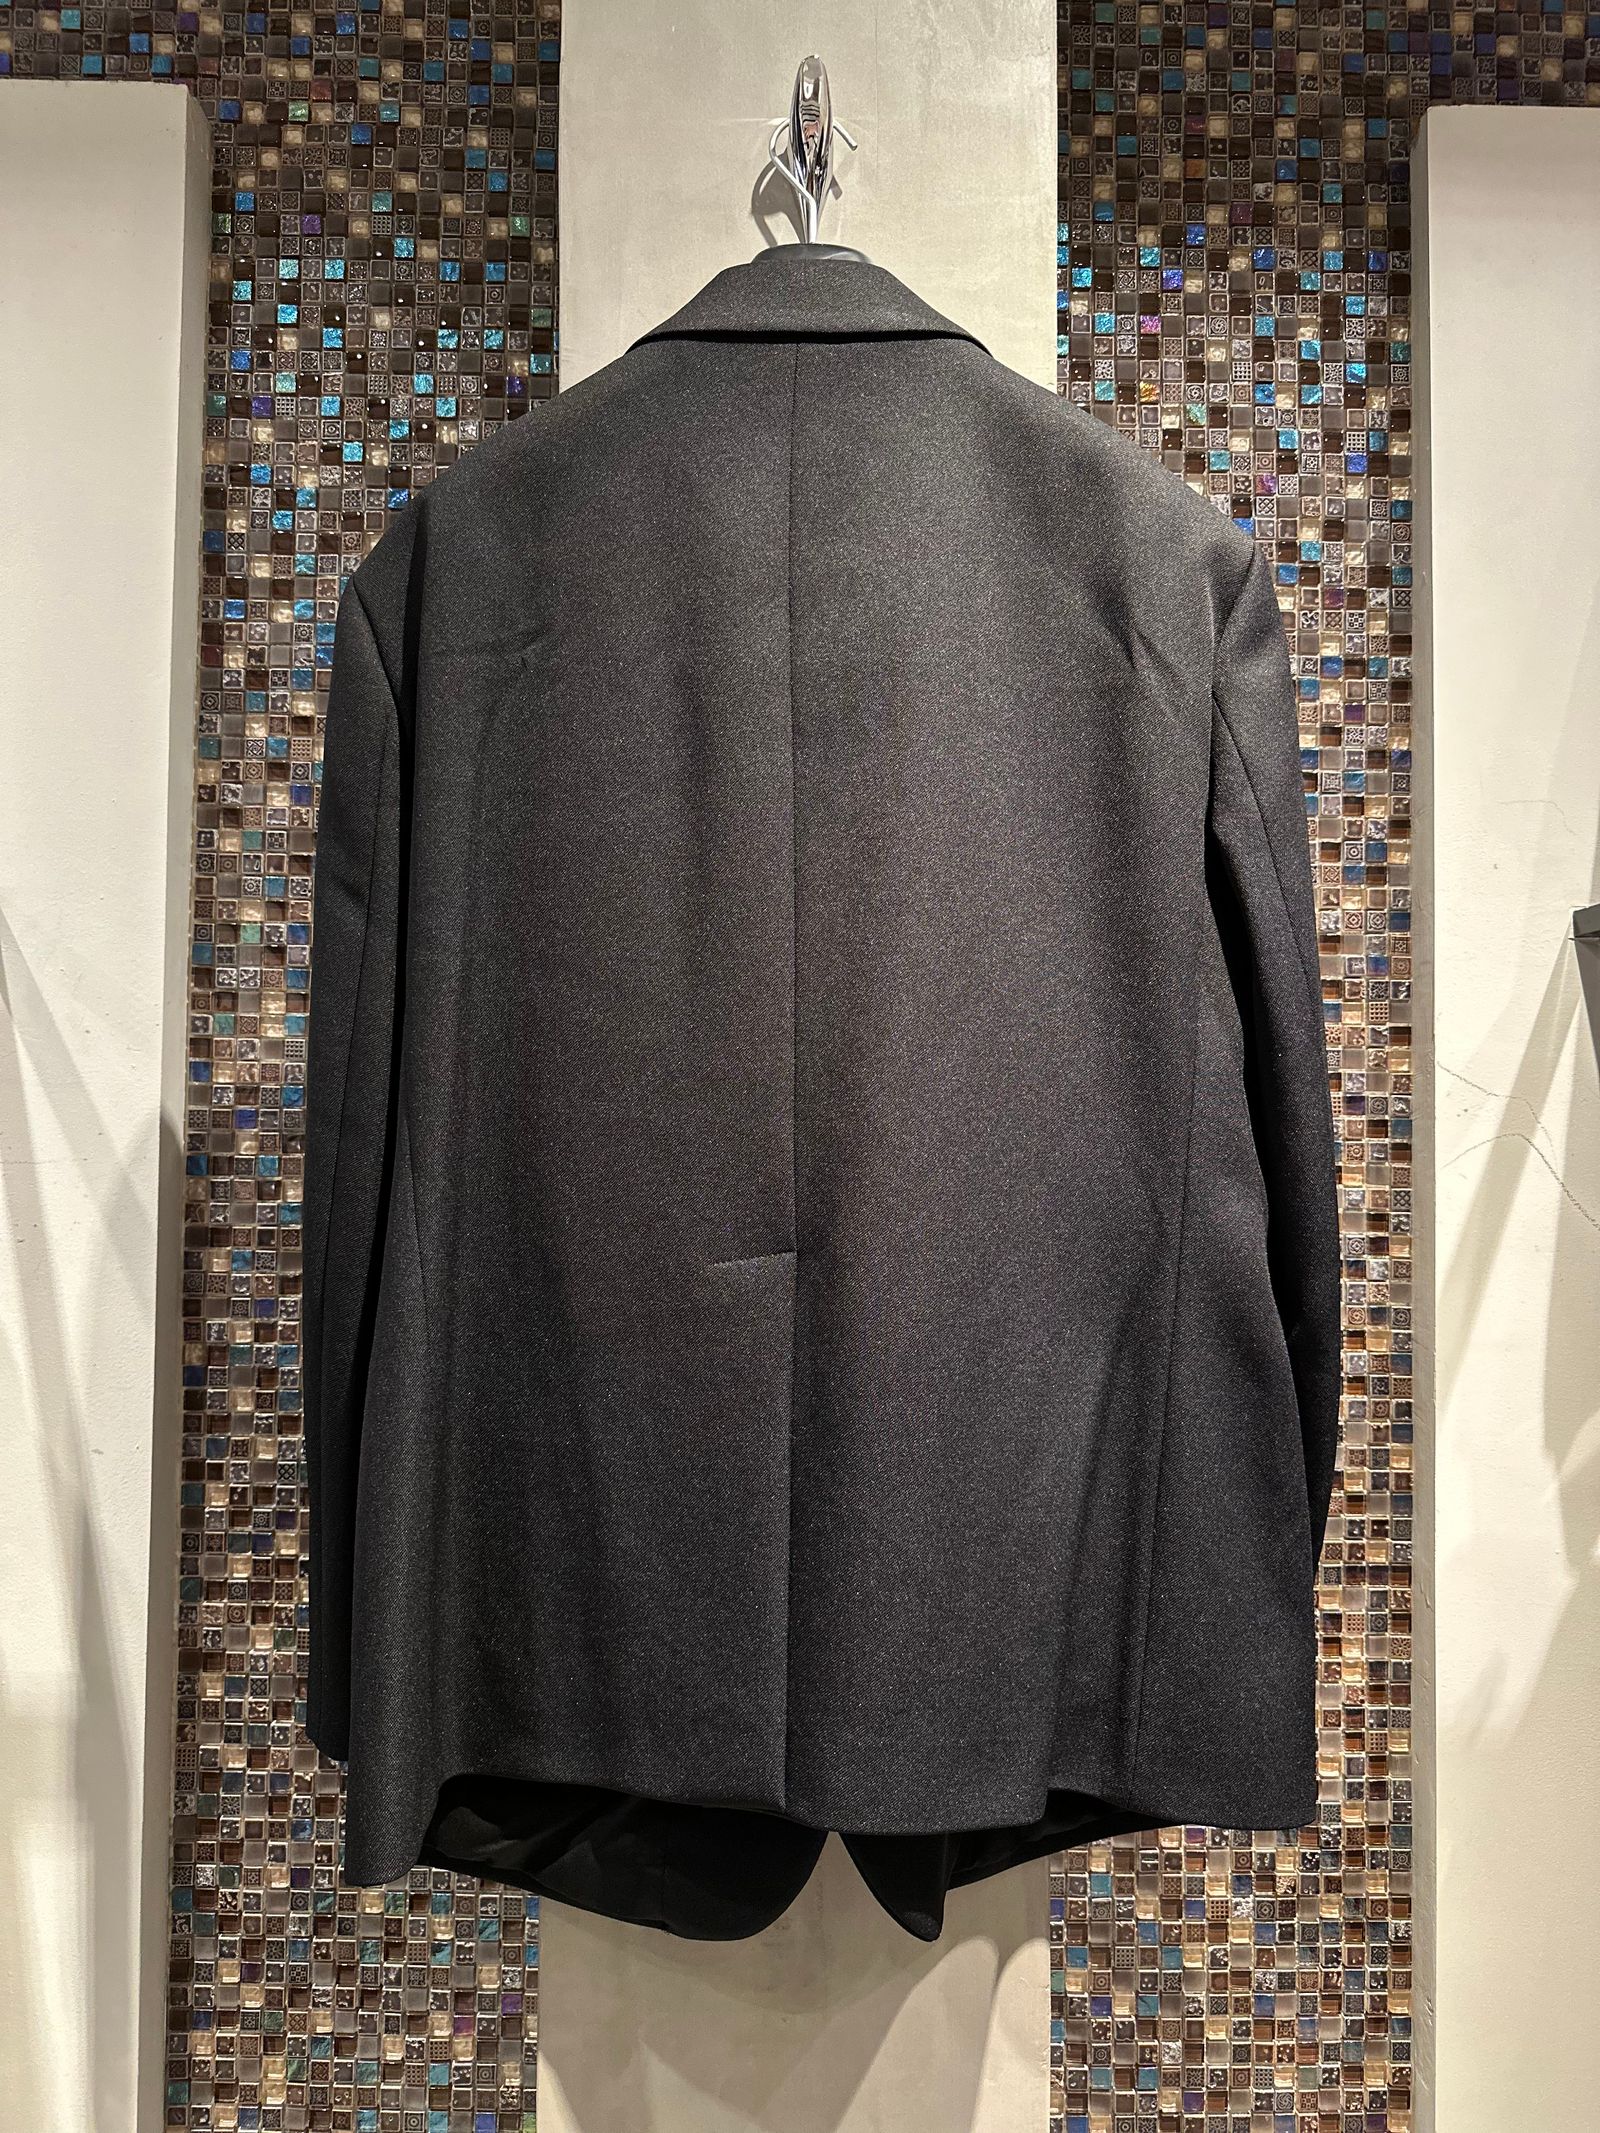 【22AW】オーバーサイズ ユニフォームポケット ブレザー / Oversized blazer with unifoorm pockets /  ブラック - 44(XS) - ブラック